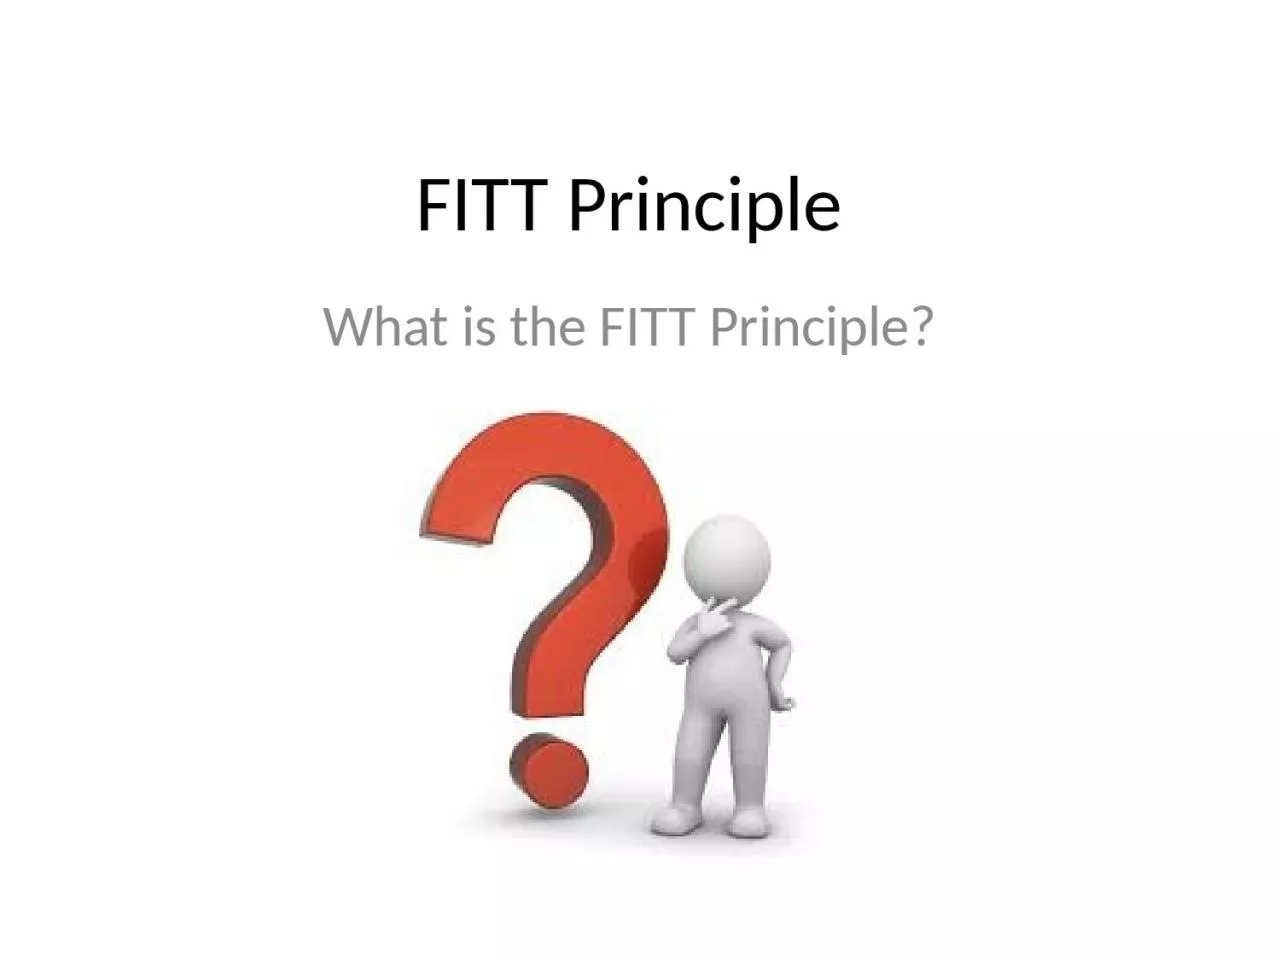 FITT Principle What is the FITT Principle?